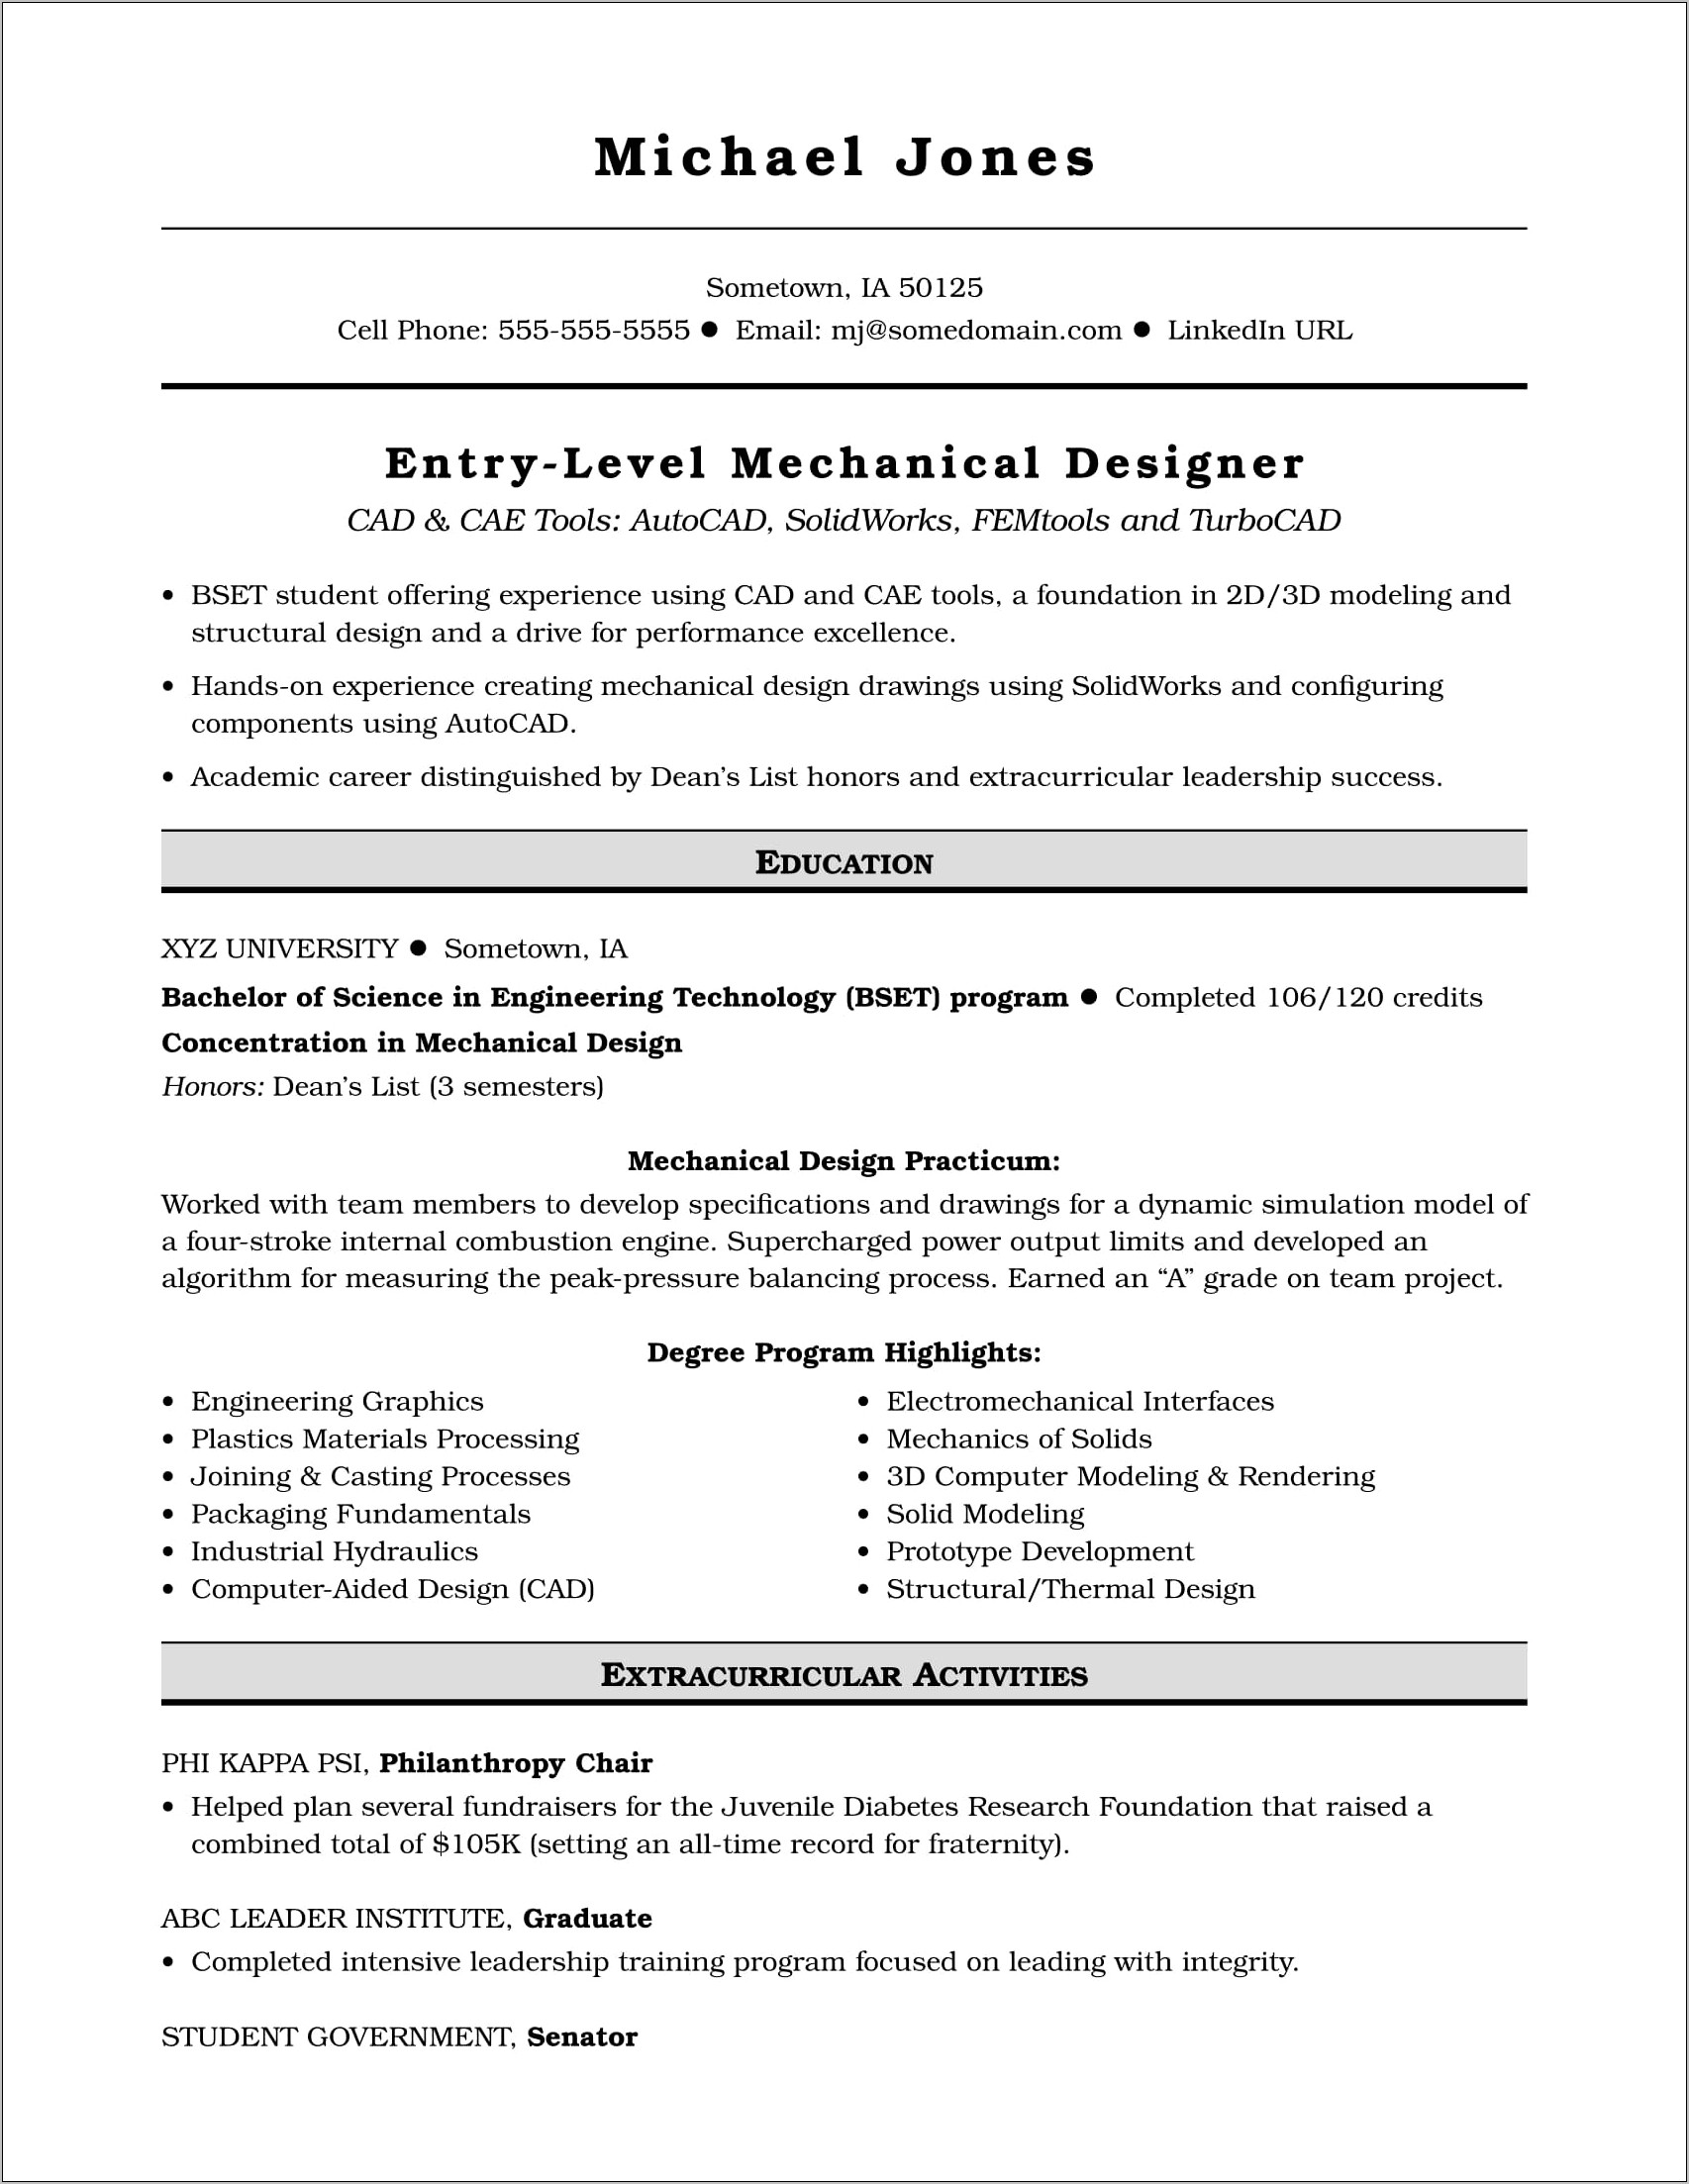 Sample Resume Format For Mechanical Design Engineer